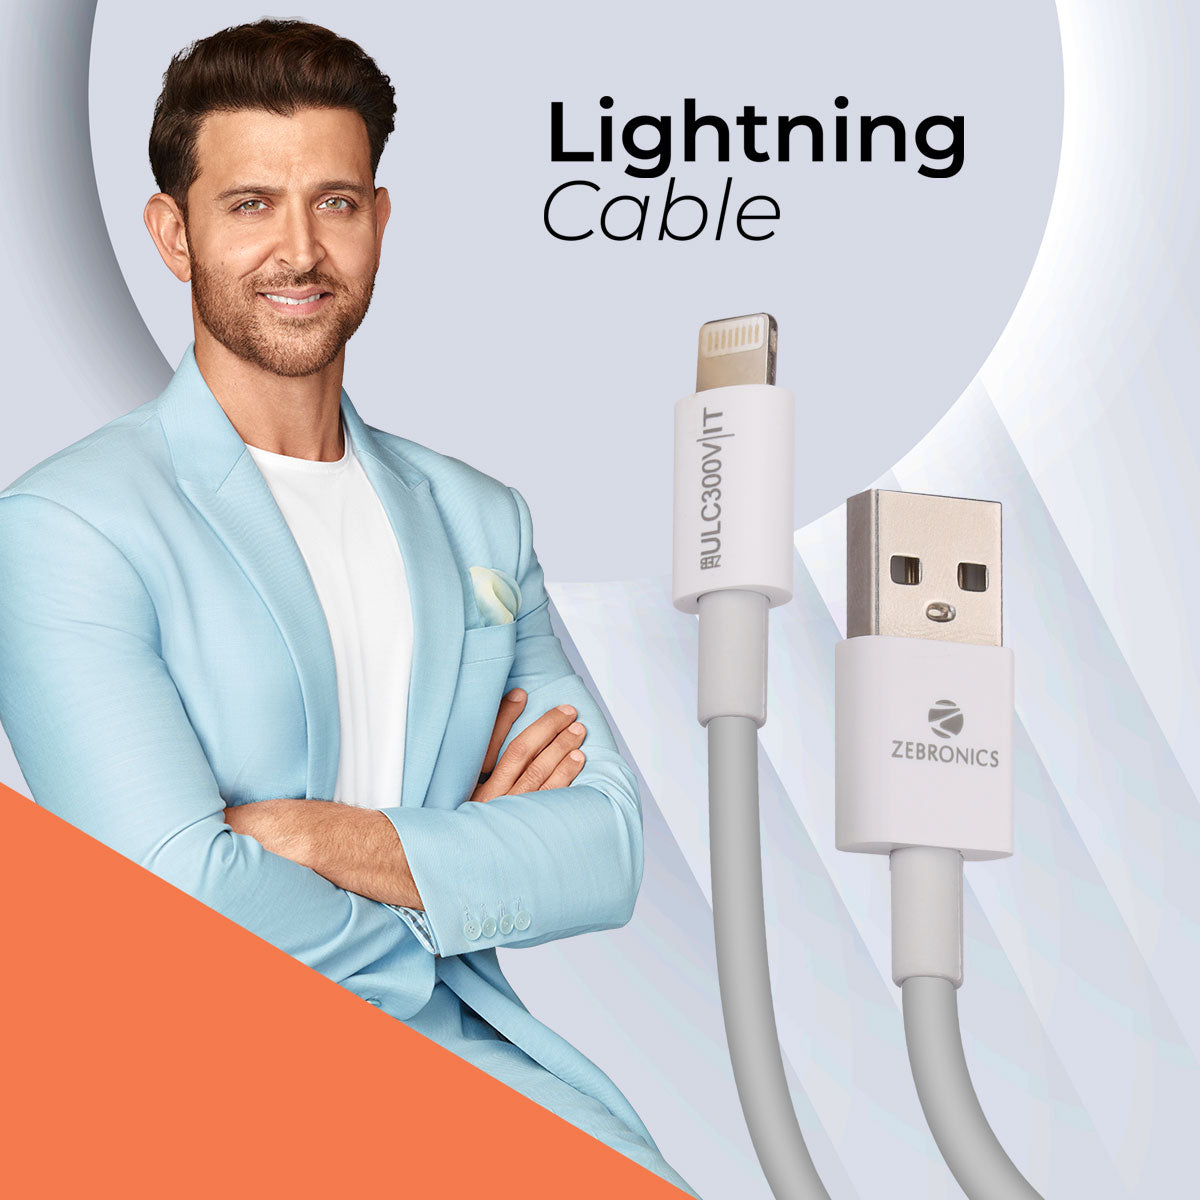 Zeb-ULC300V - Lightning Cable - Zebronics